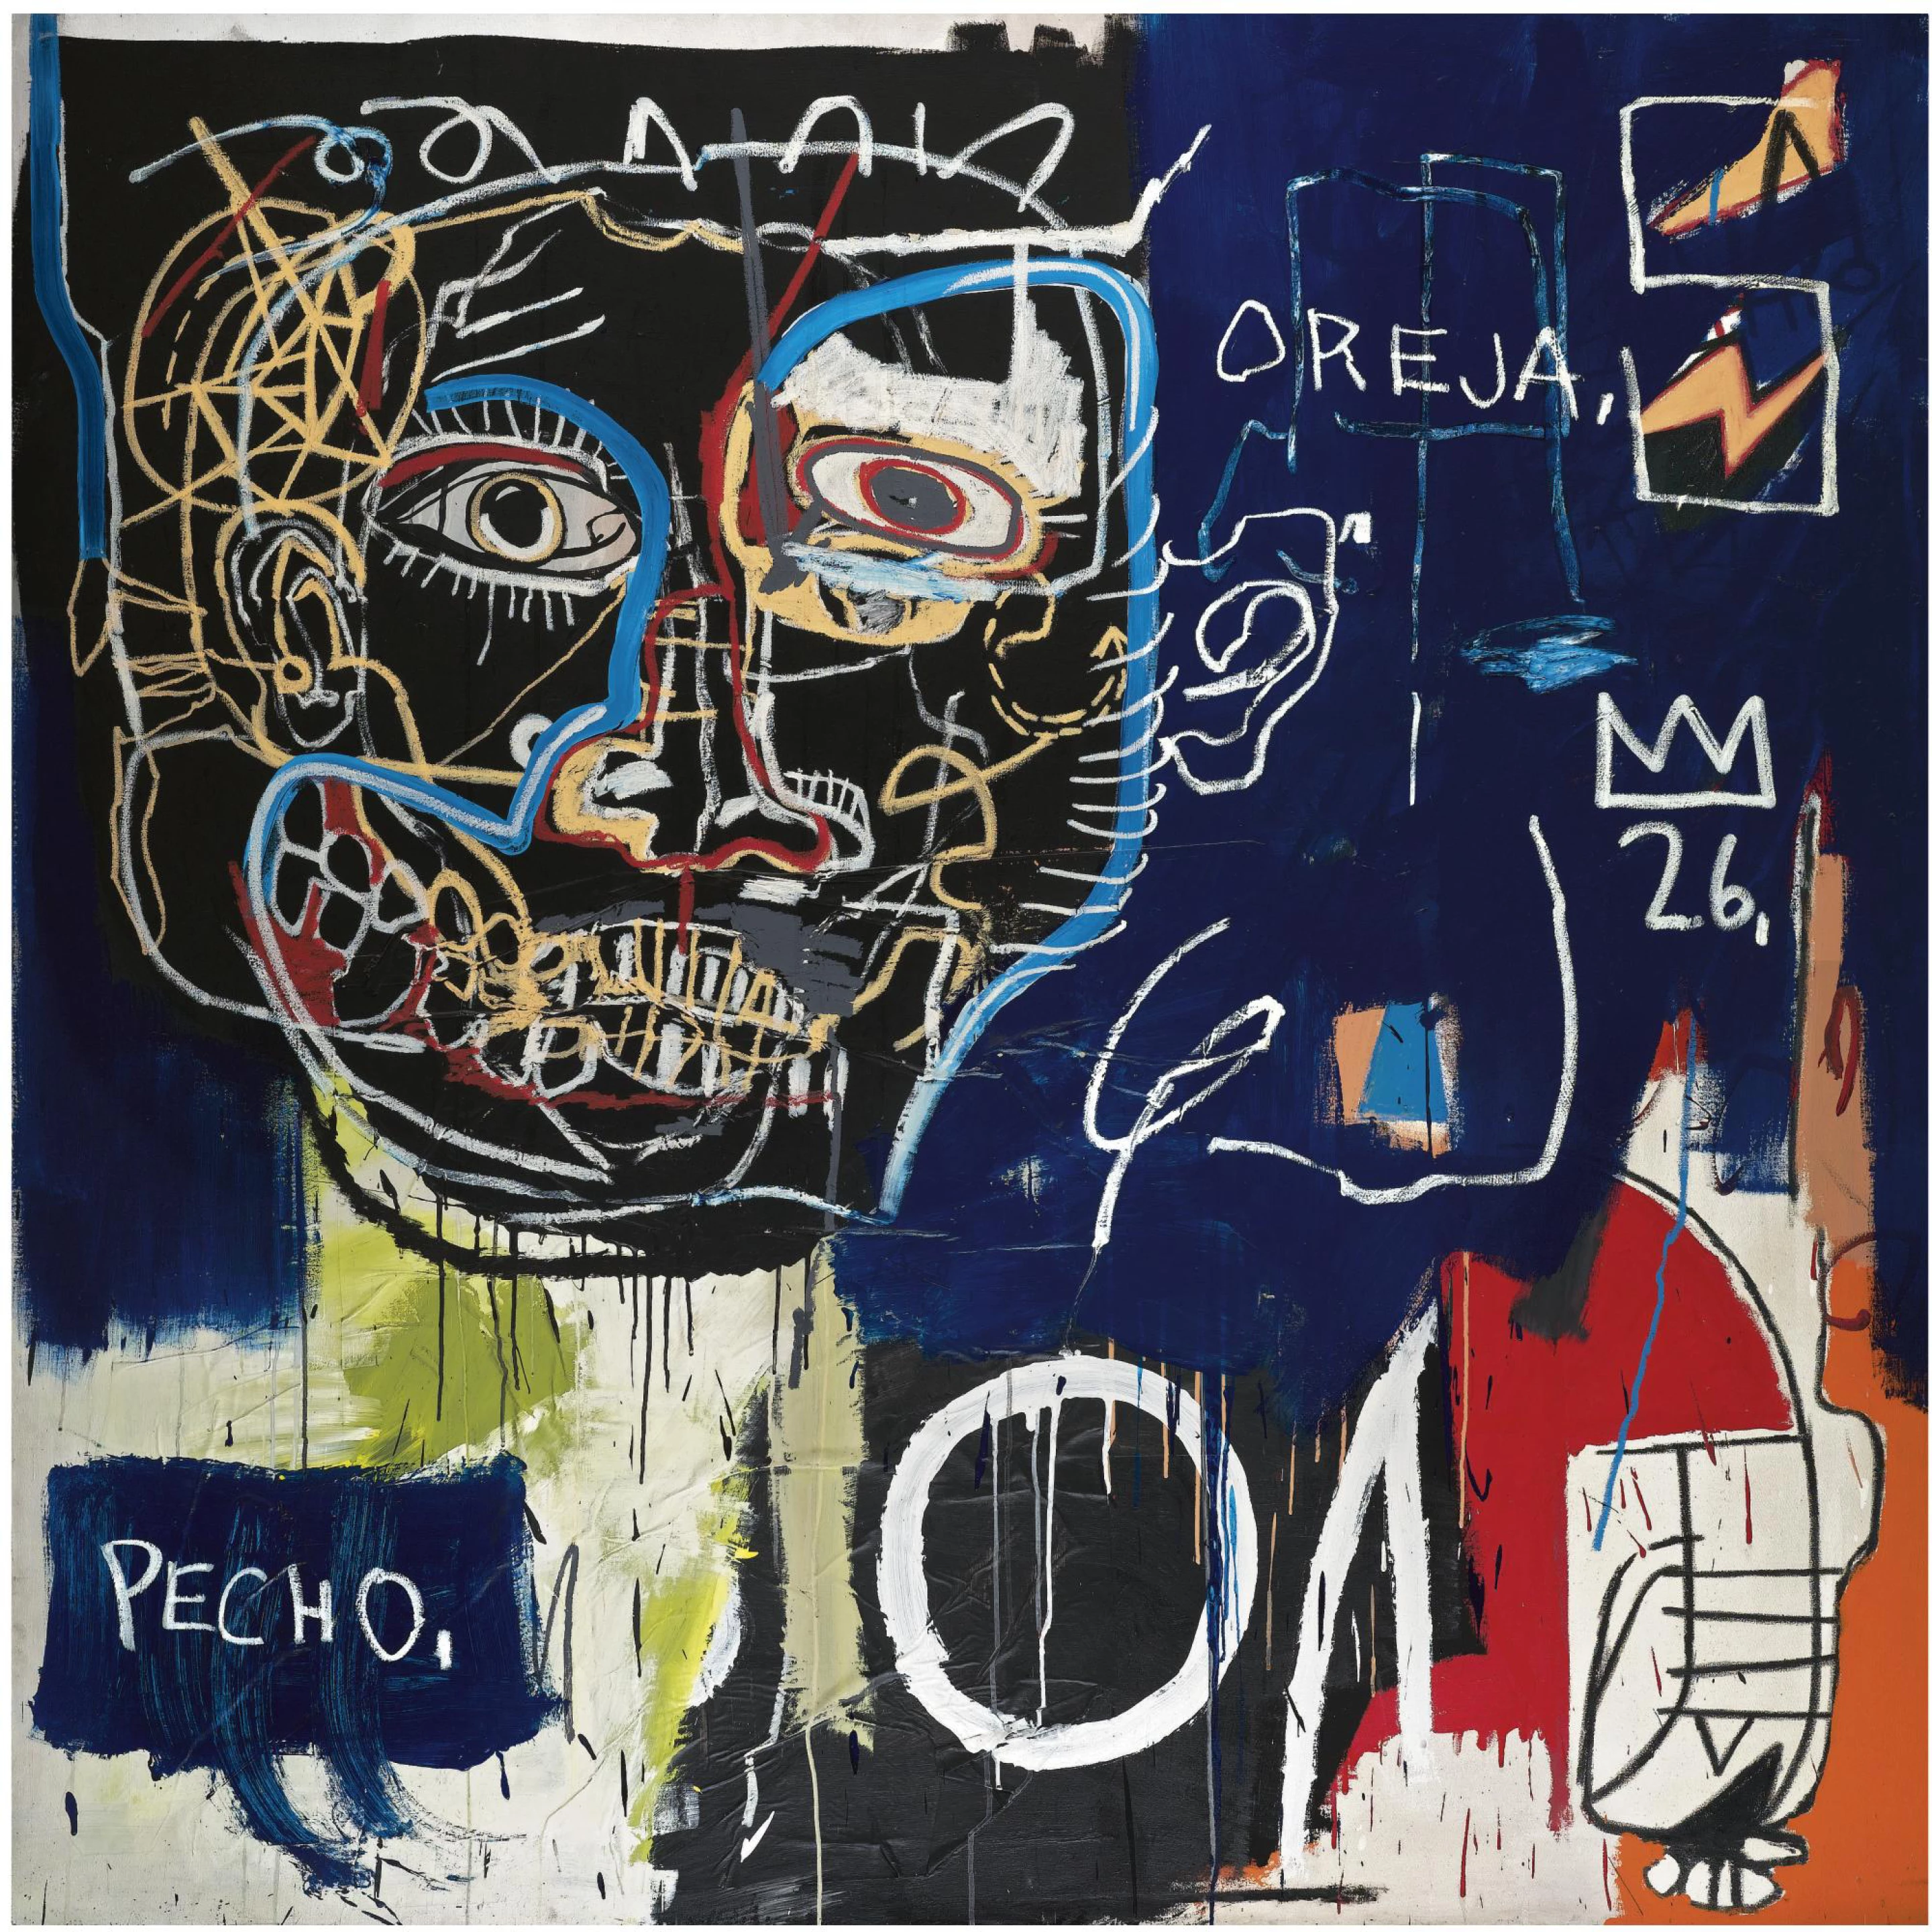 Jean-Michel Basquiat, Untitled (Pecho/ Oreja), 1982-83